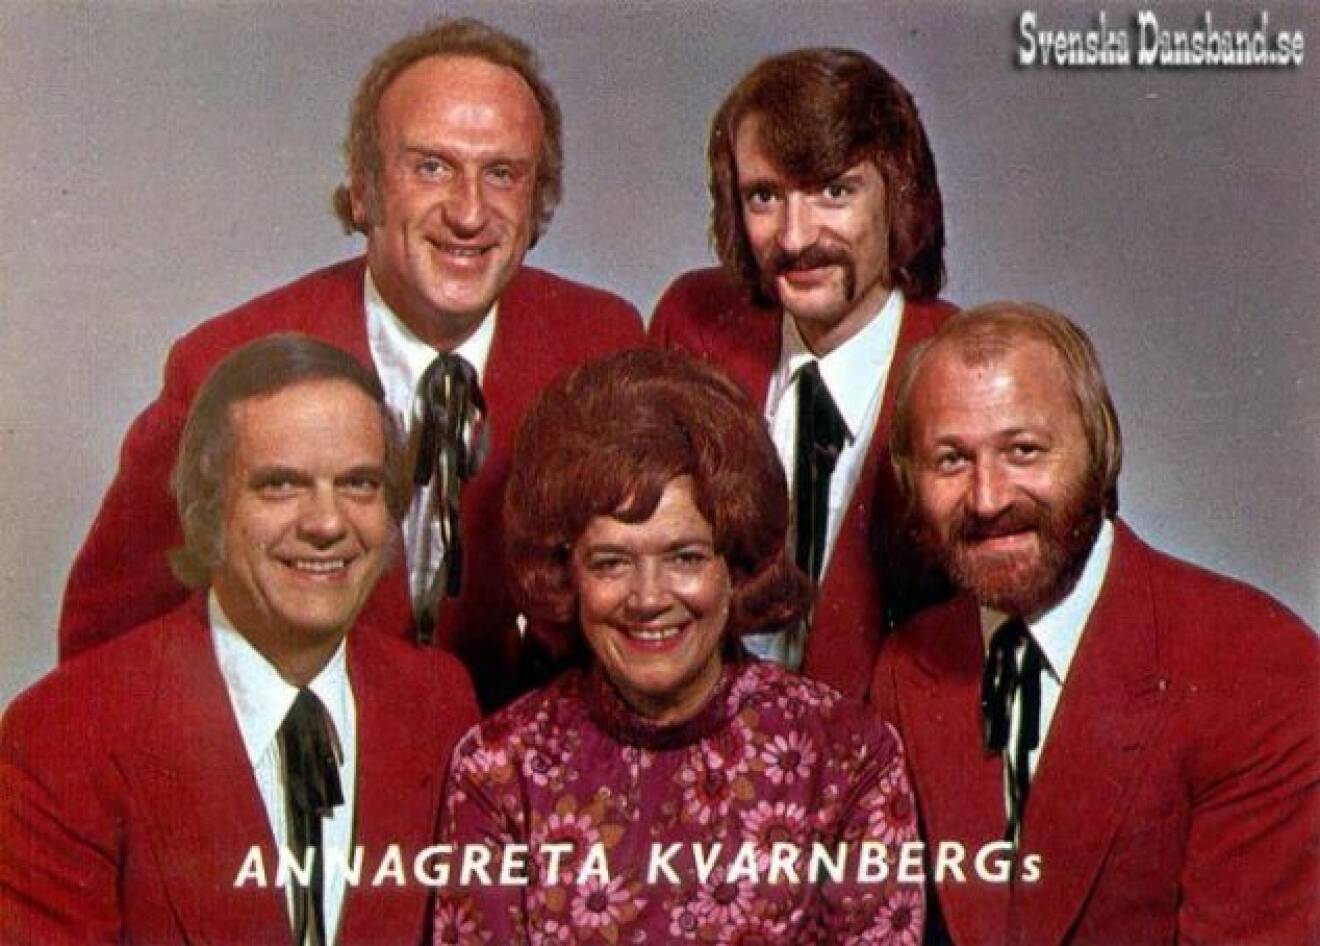 Annagreta Kvarnbergs Svenska dansband.